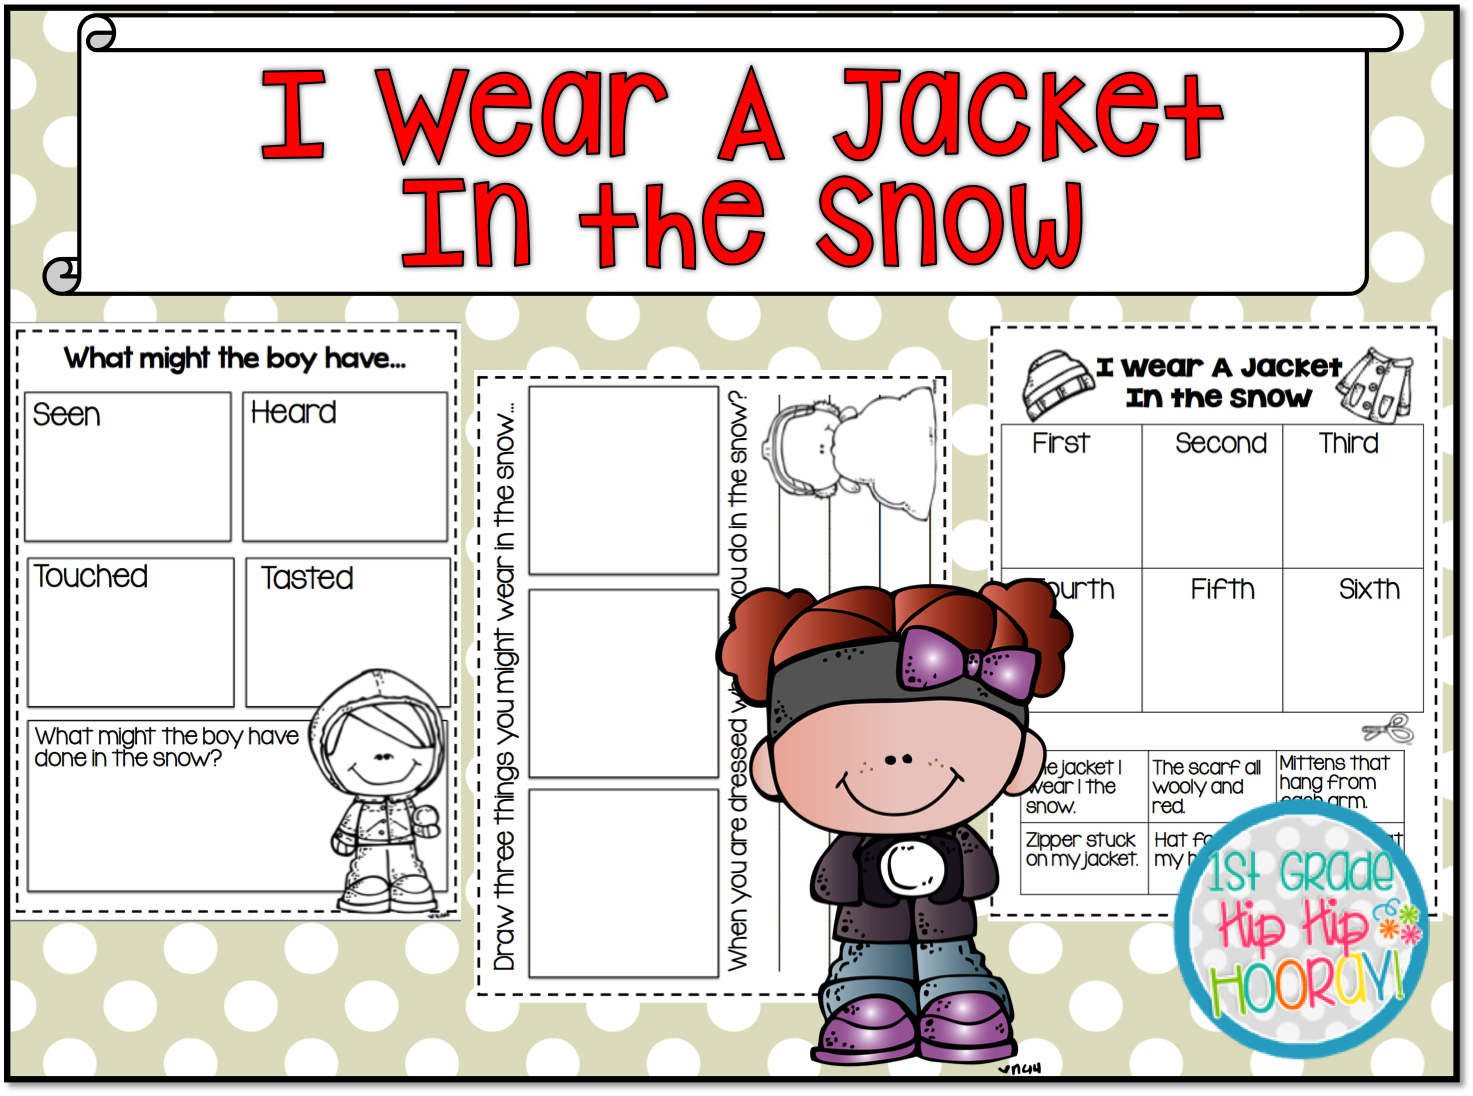 1st-grade-hip-hip-hooray-the-jacket-i-wear-in-the-snow